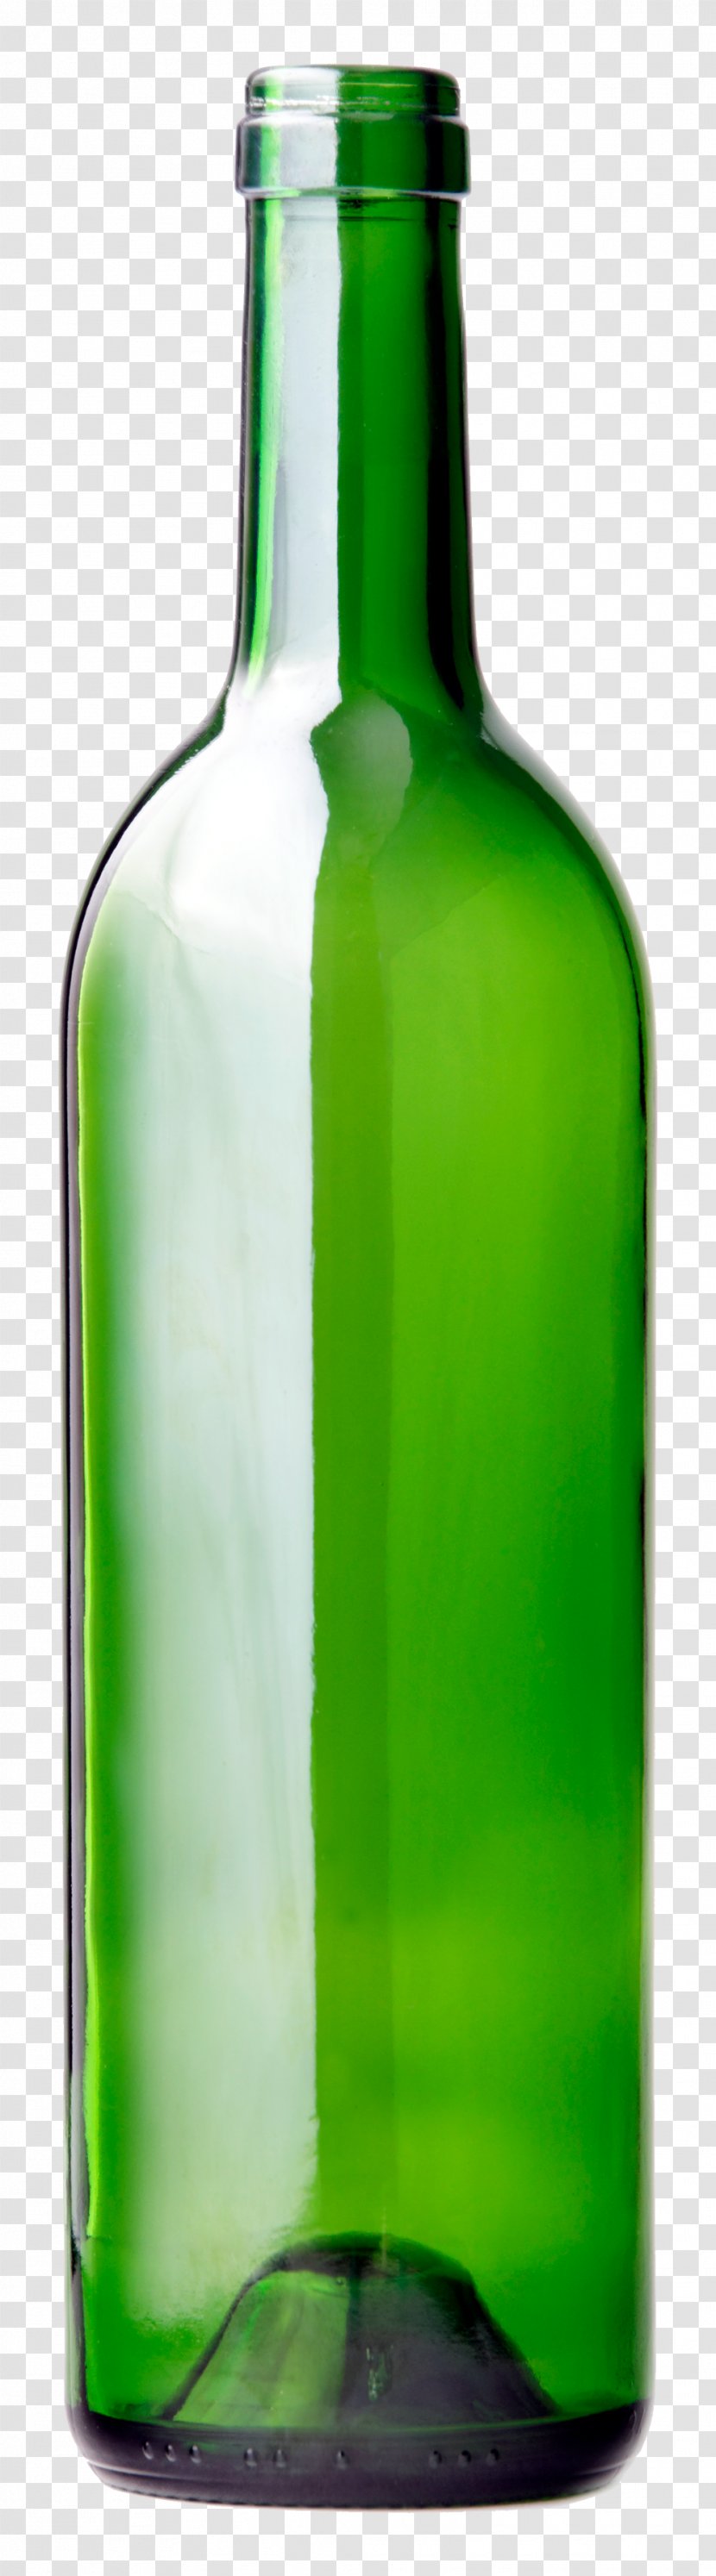 Wine Glass Bottle Clip Art - Plastic - Green Image Transparent PNG